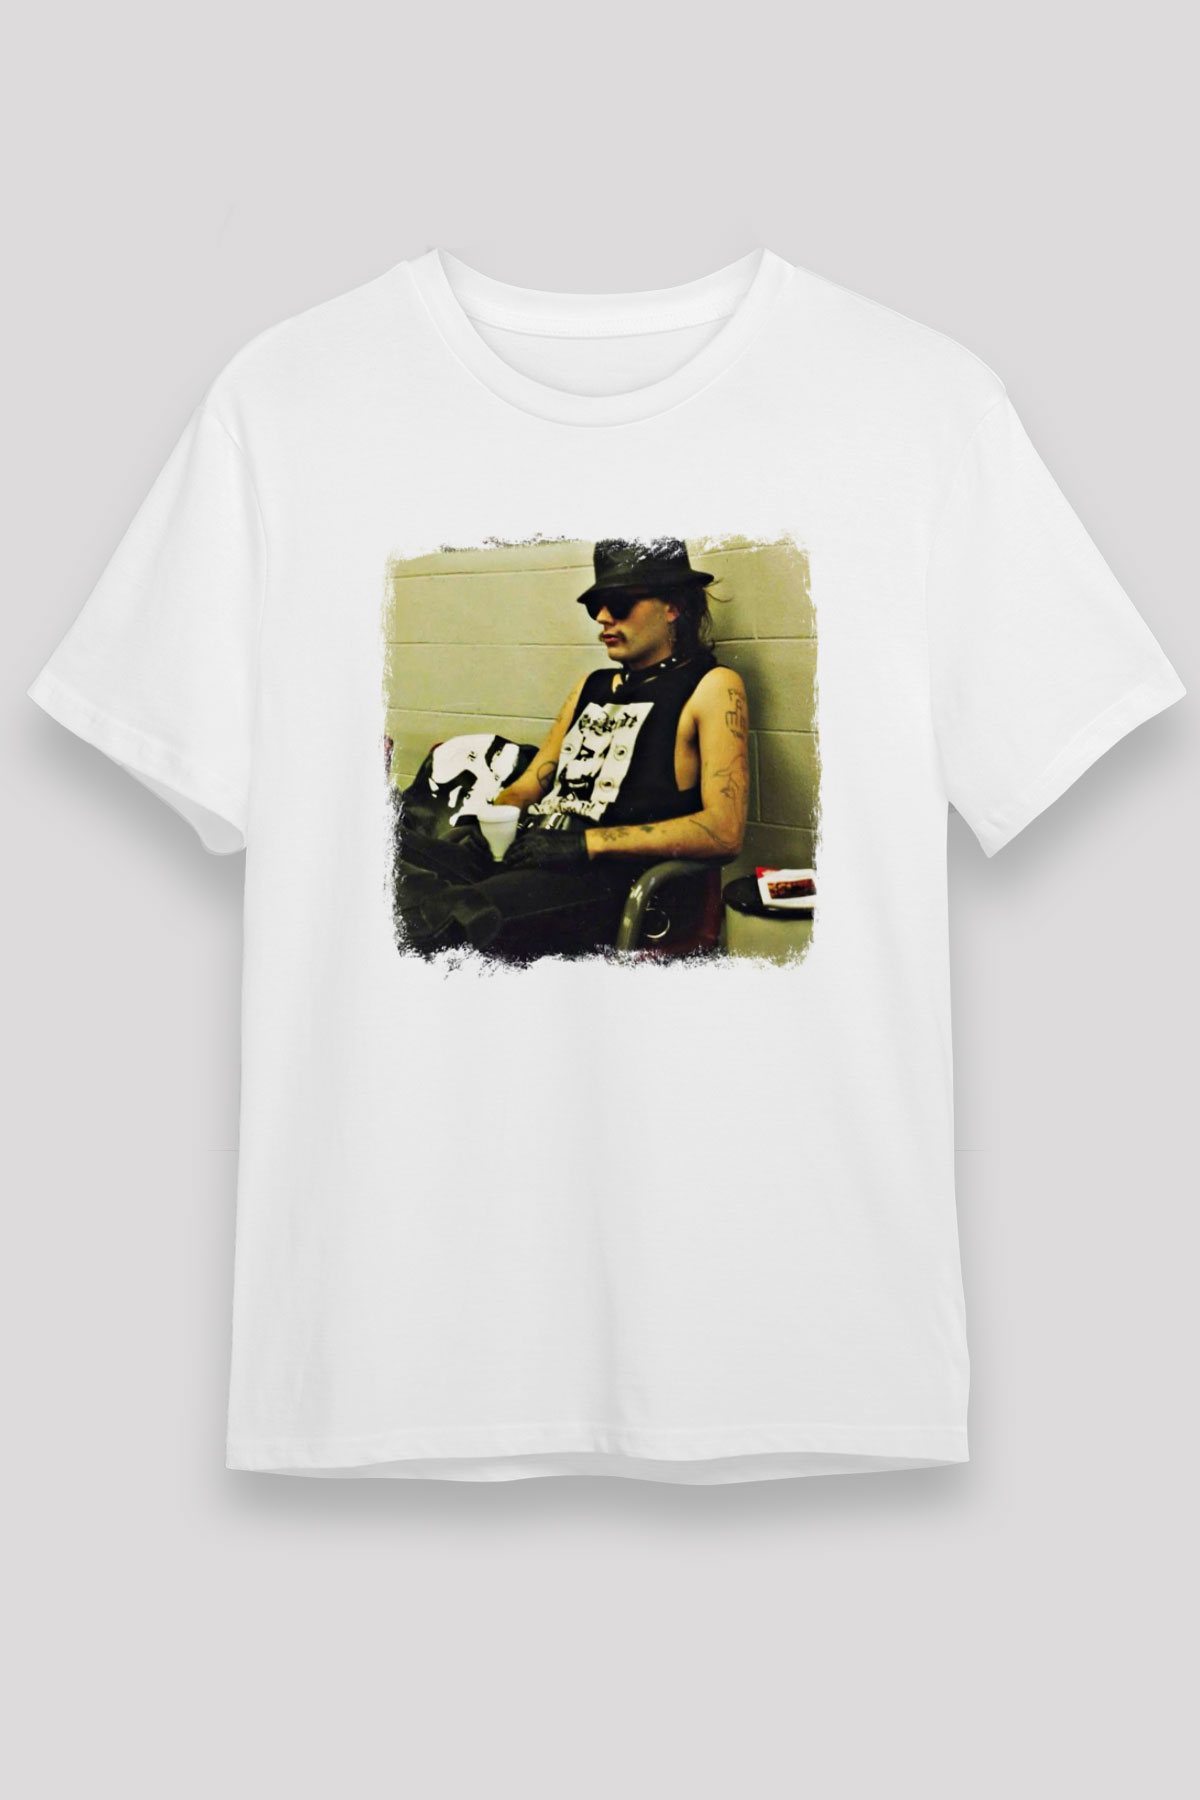 GG Allin T shirt, Music Band ,Unisex Tshirt 03